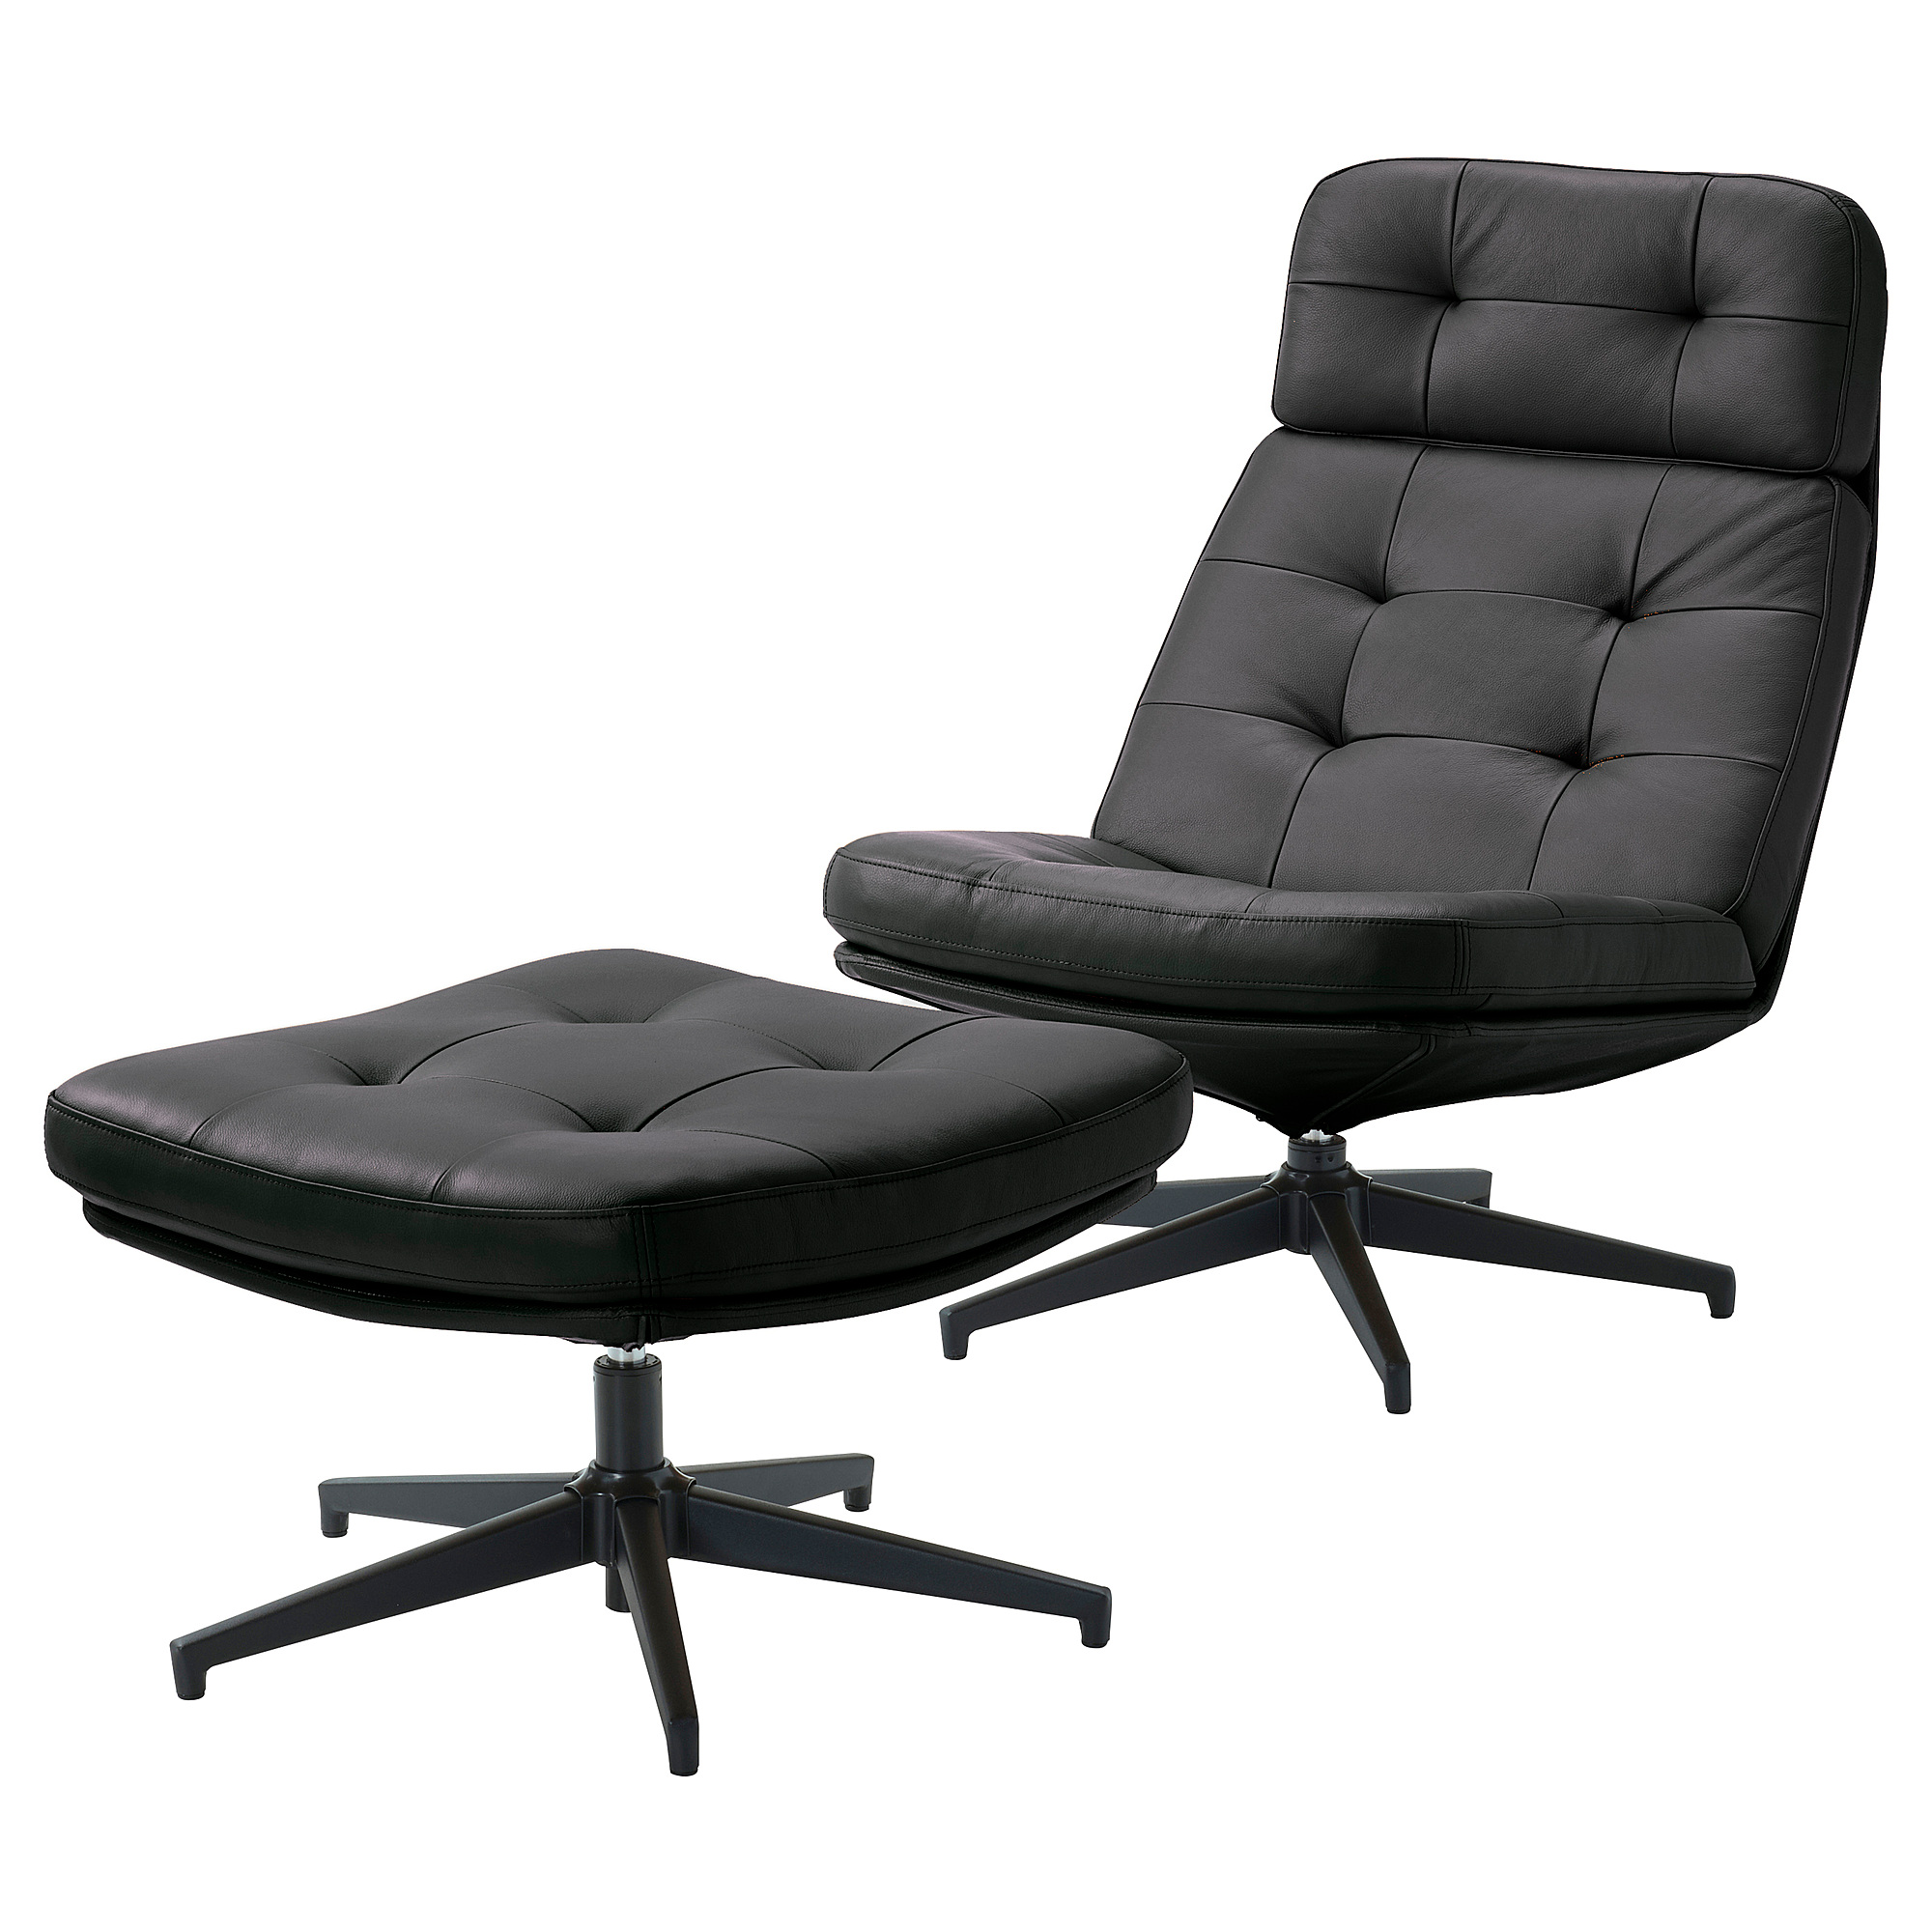 HAVBERG armchair and footstool